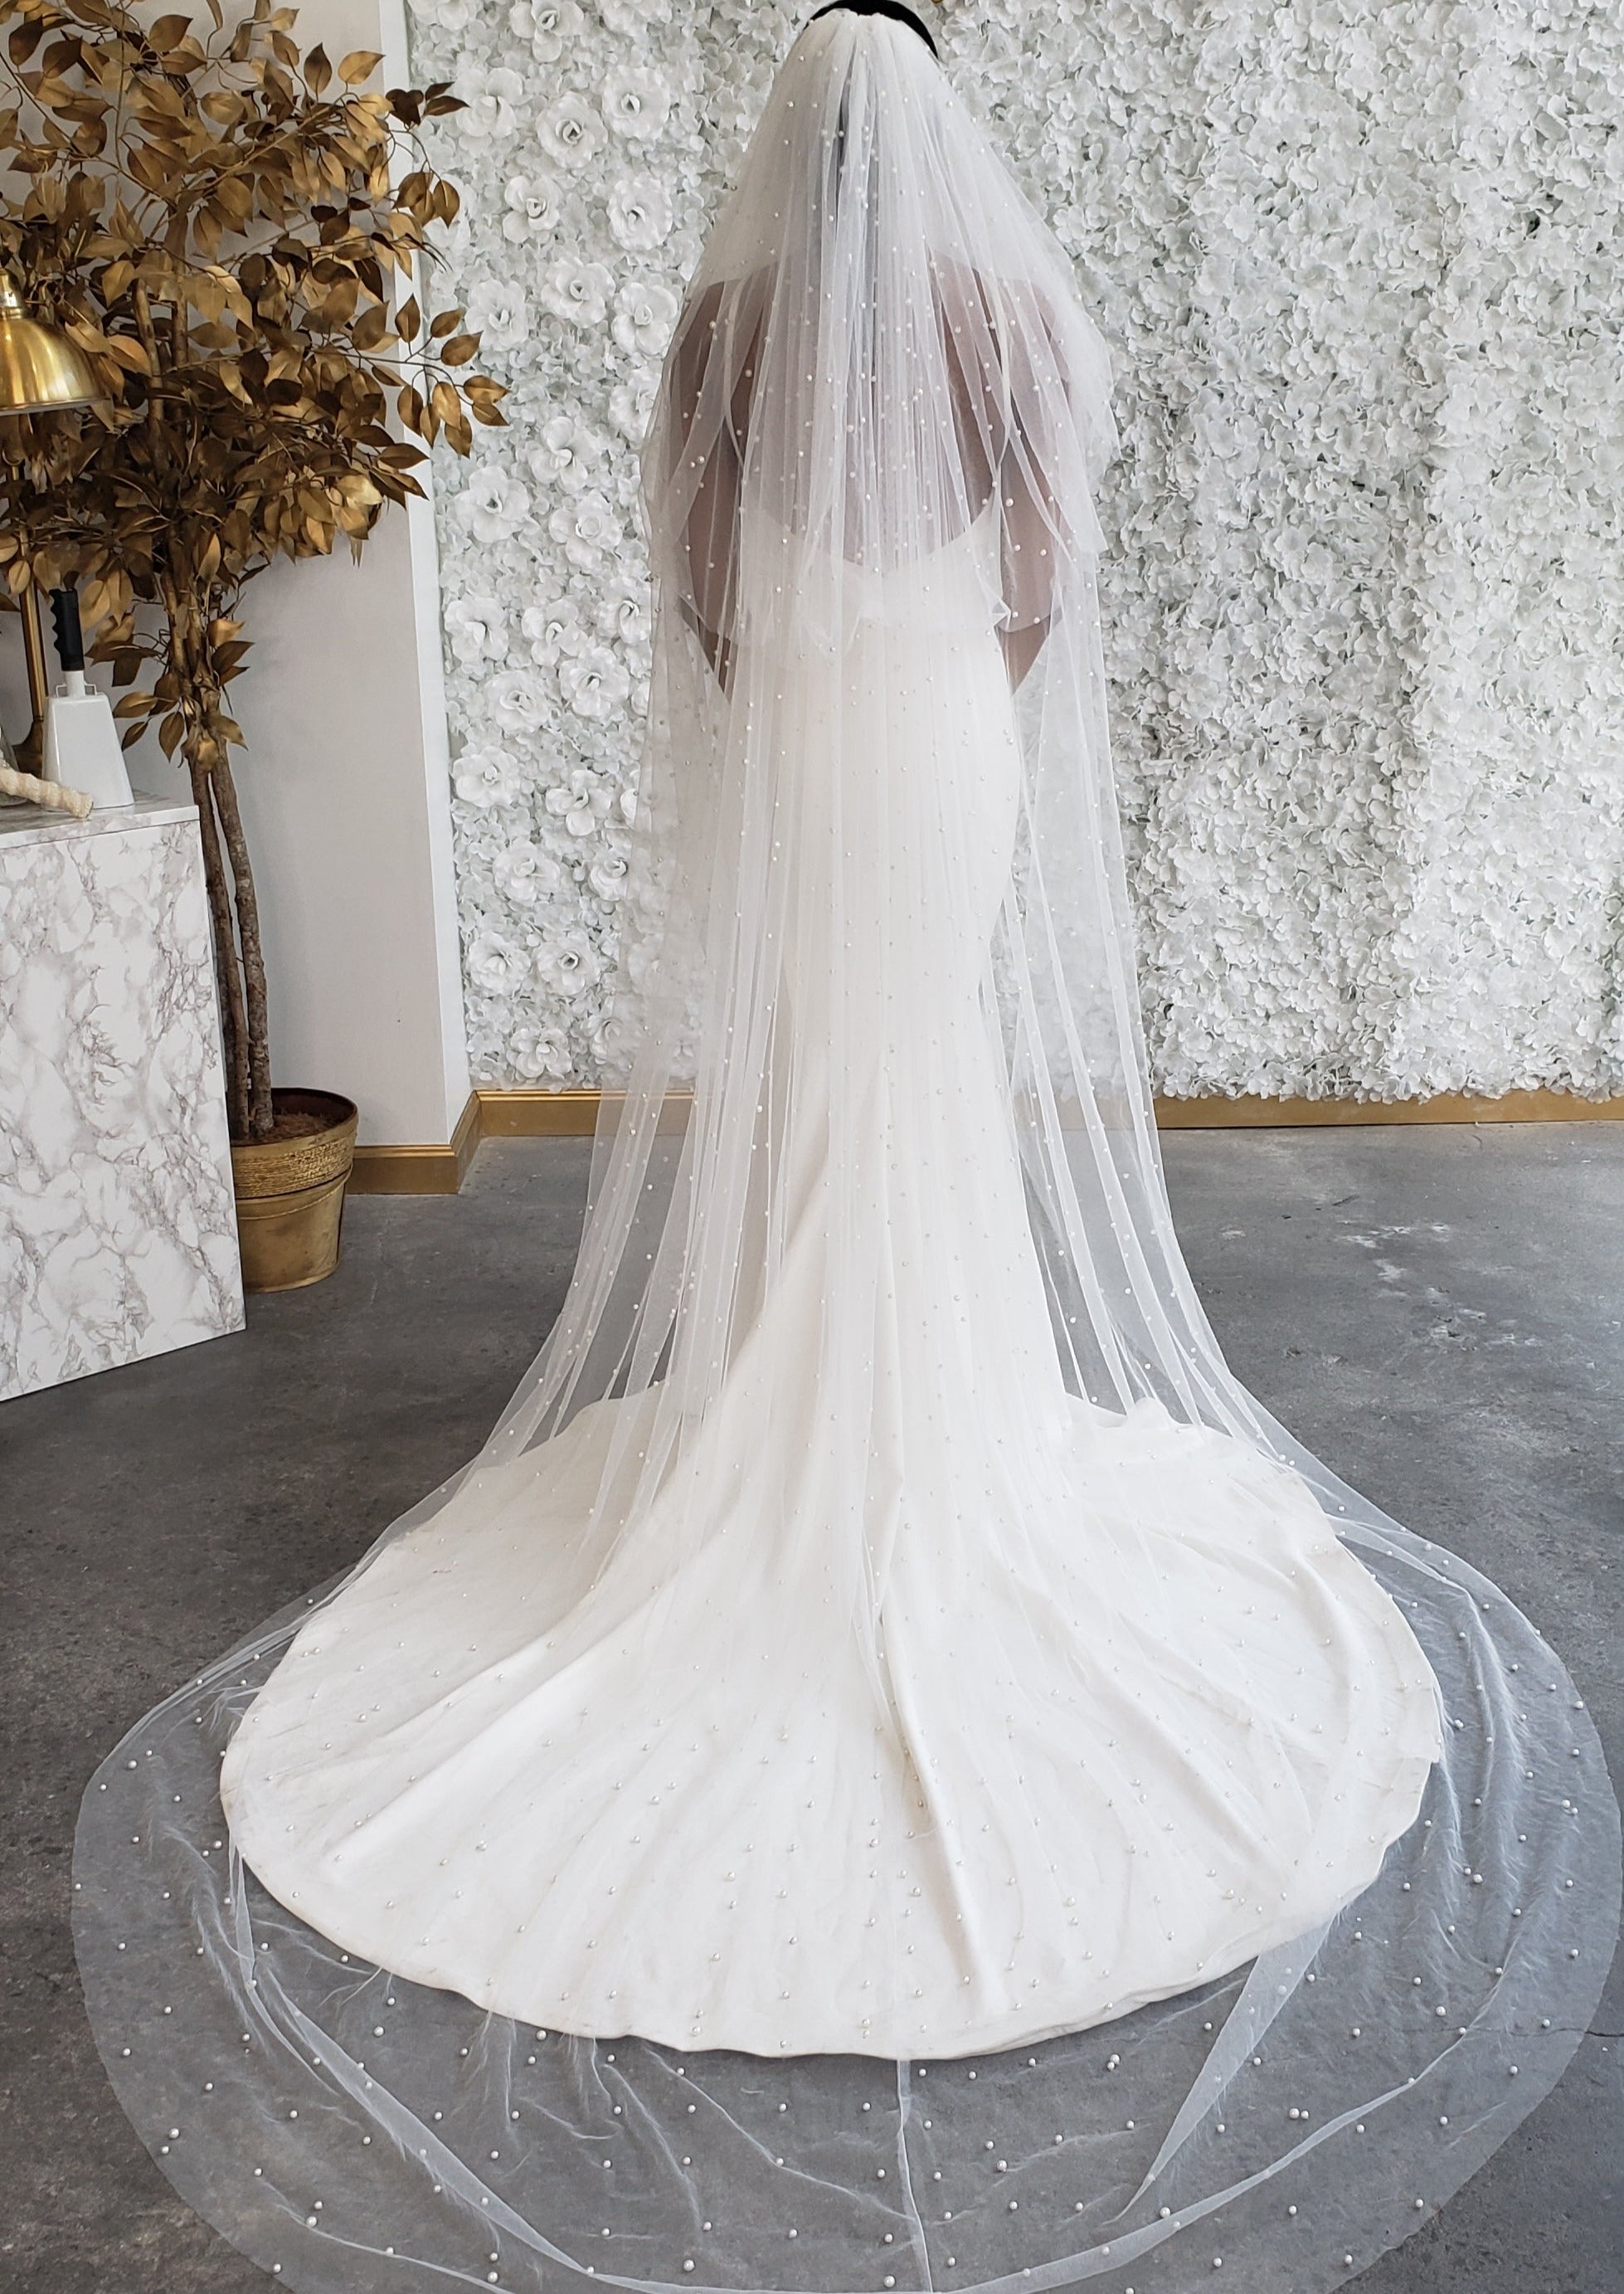 ApolloBox Romantic Pearl Bridal Veil